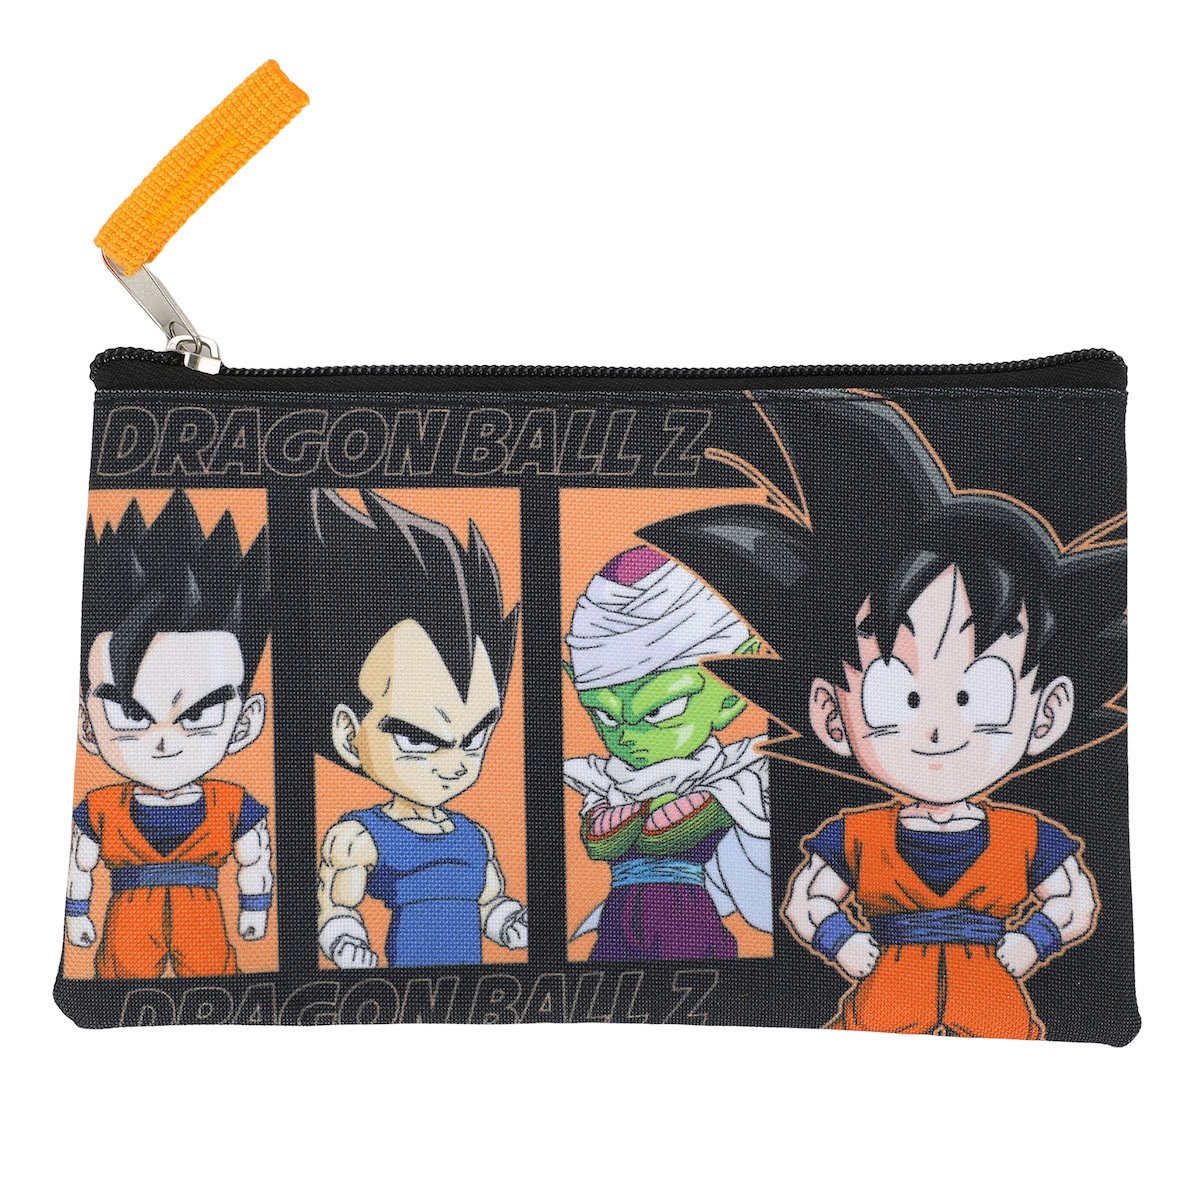 Dragon Ball Z Goku Mini-Backpack - Entertainment Earth